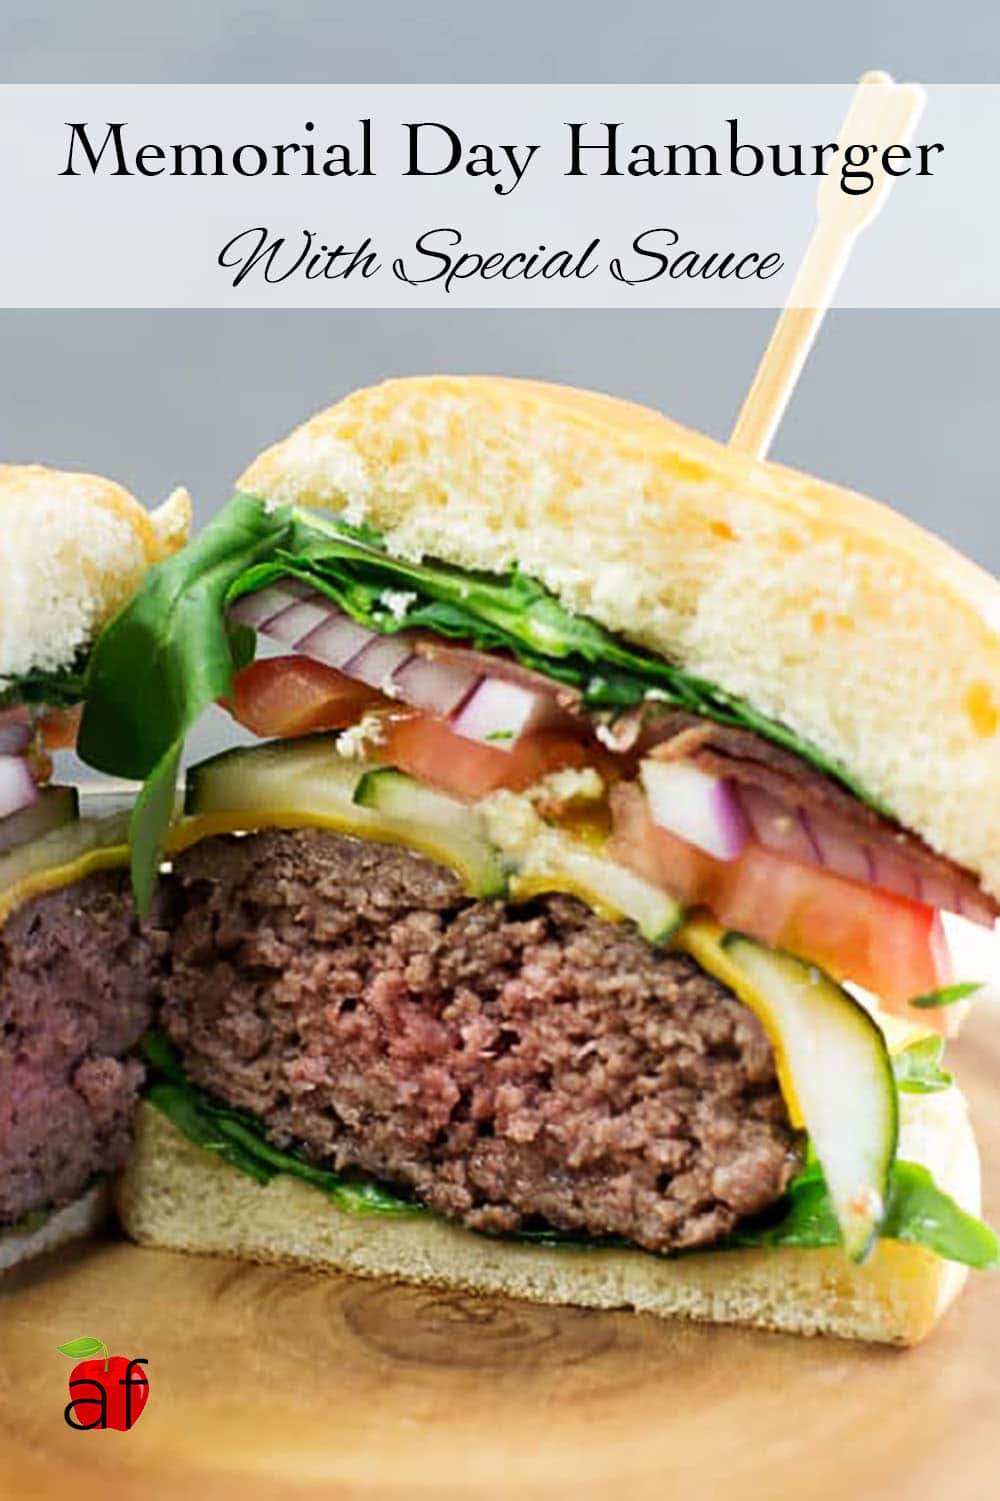 Big Juicy Hamburger Made With Secret Sauce - Artzy Foodie